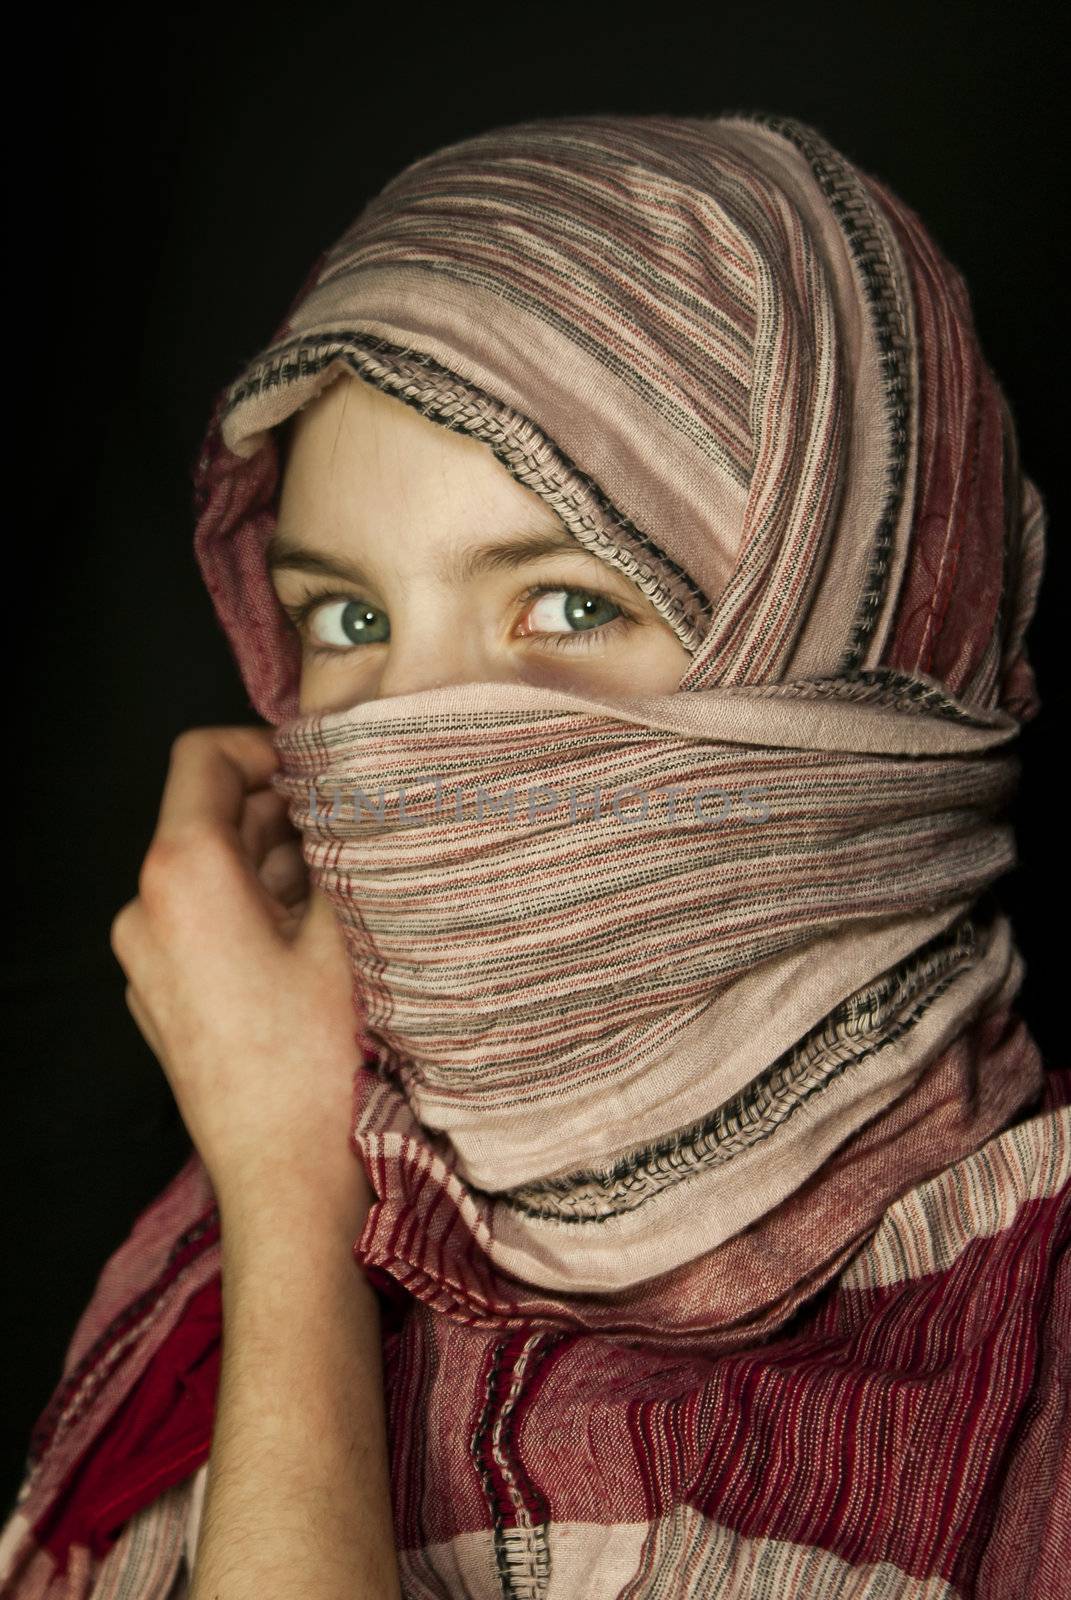 Little girl muffled in a shawl